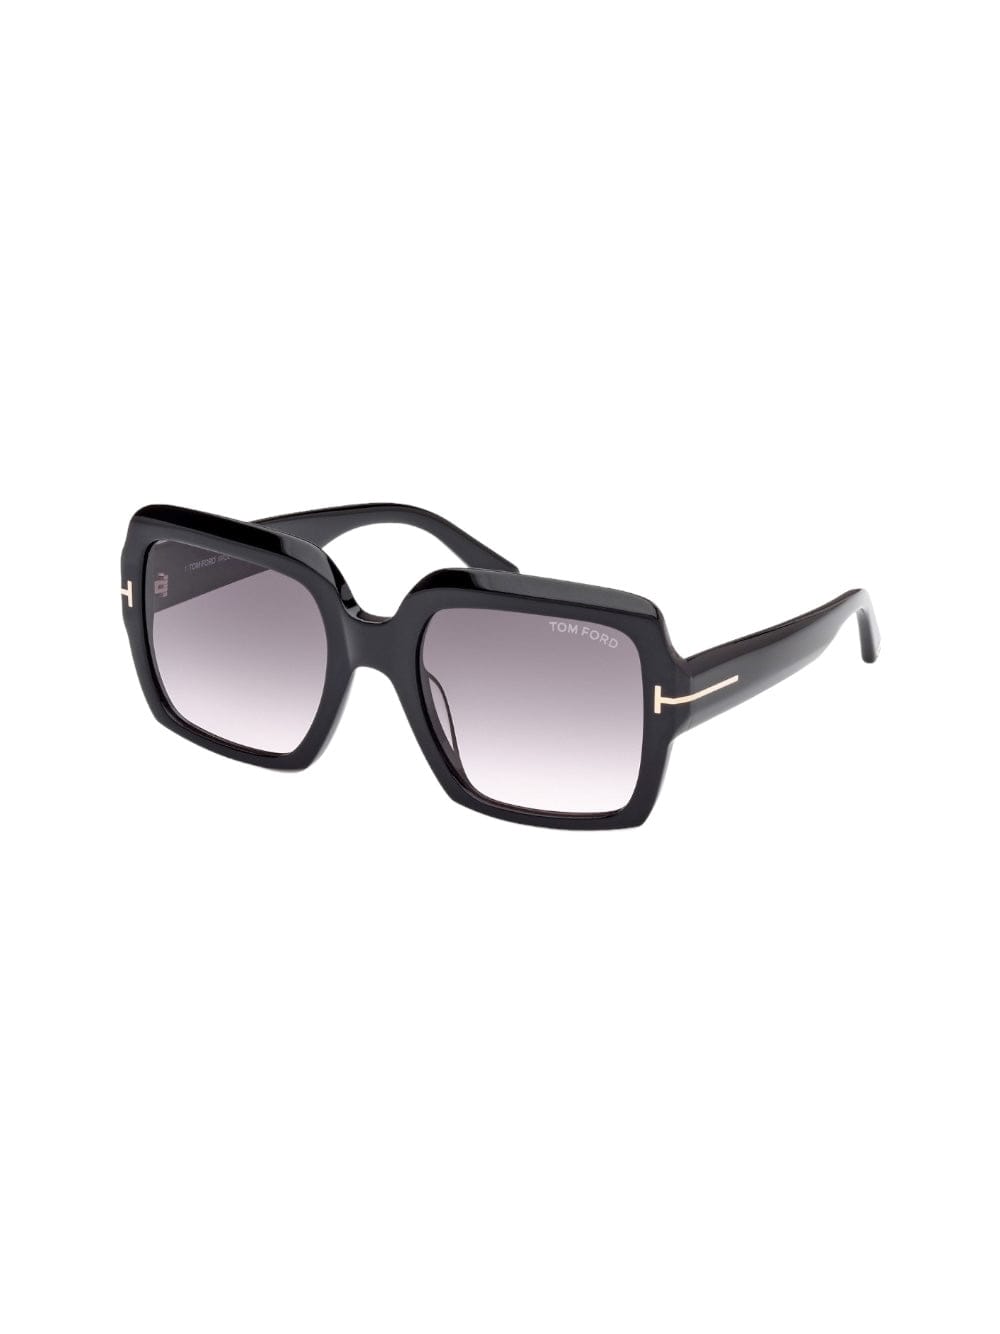 Leigh - Ft 1115 /s Sunglasses